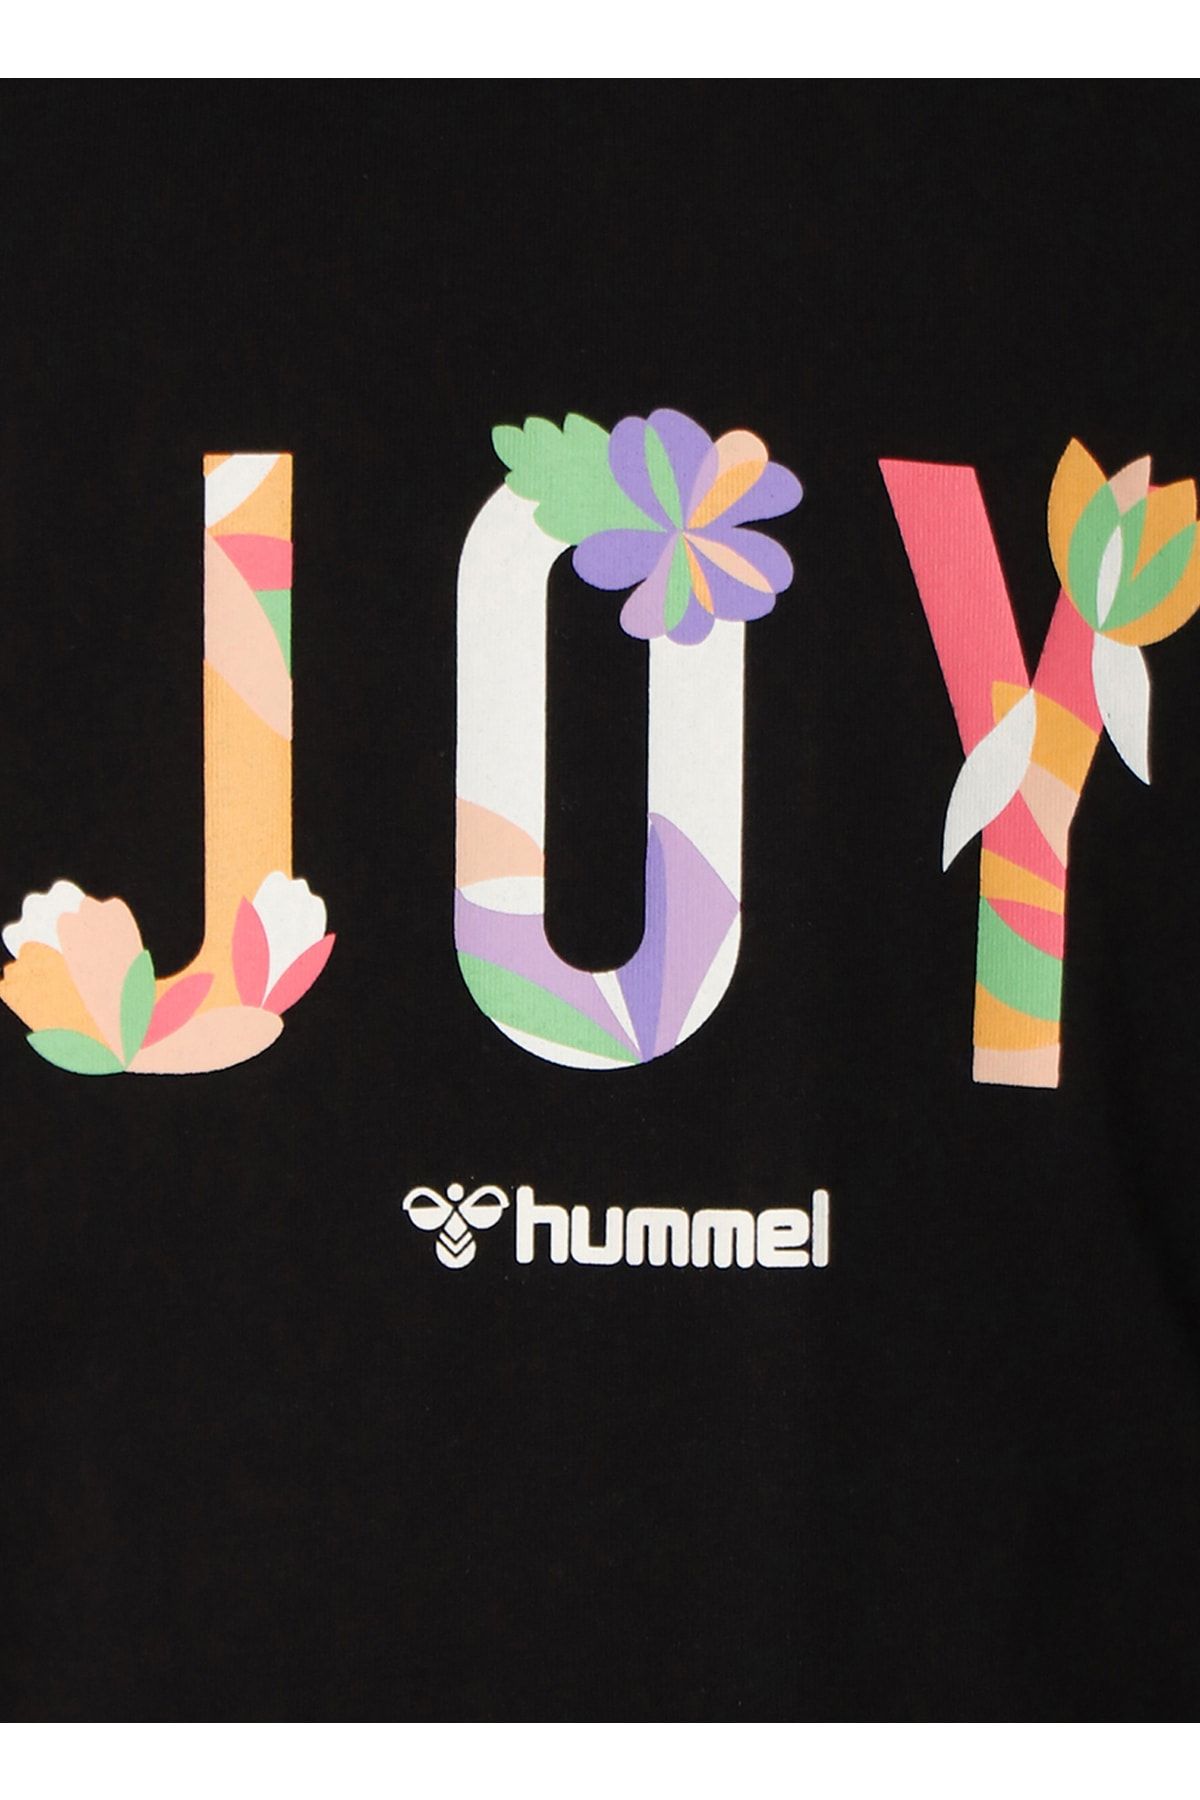 hummel تی شرت دختر سیاه چاپی 911625-2001 T-Shift Hmlaery